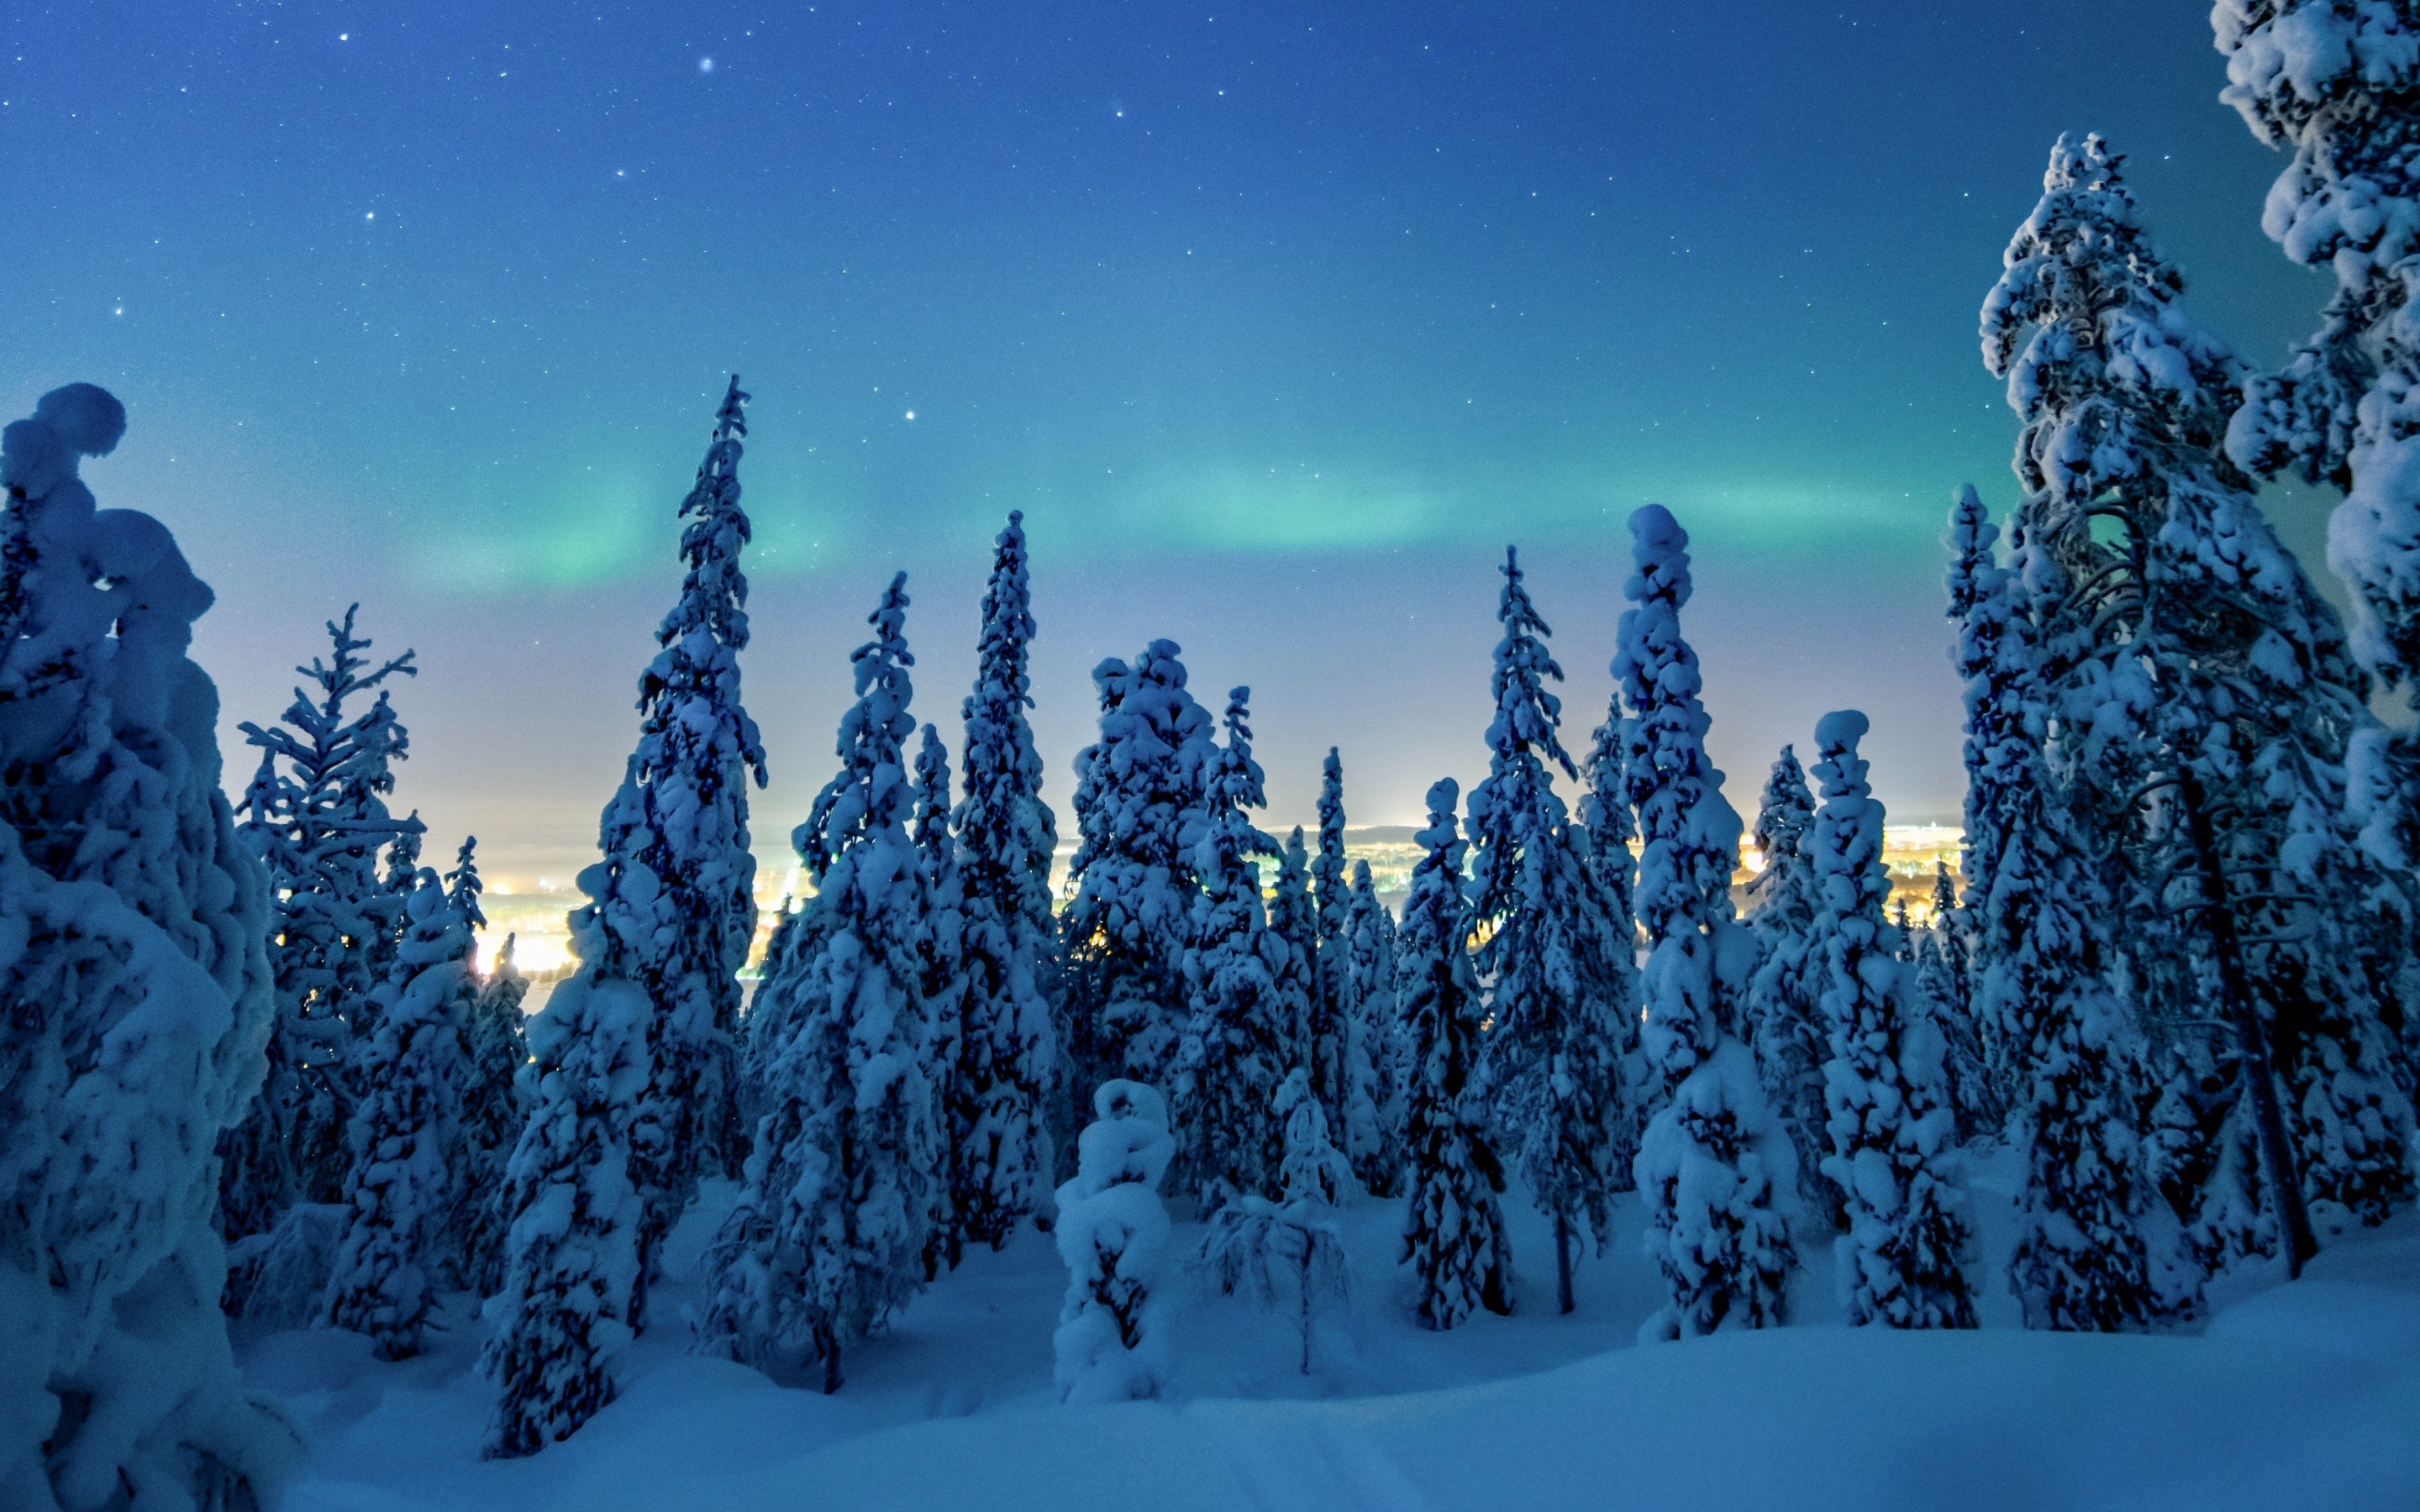 Winter, dawn, colorful sky, trees, 2880x1800 wallpaper